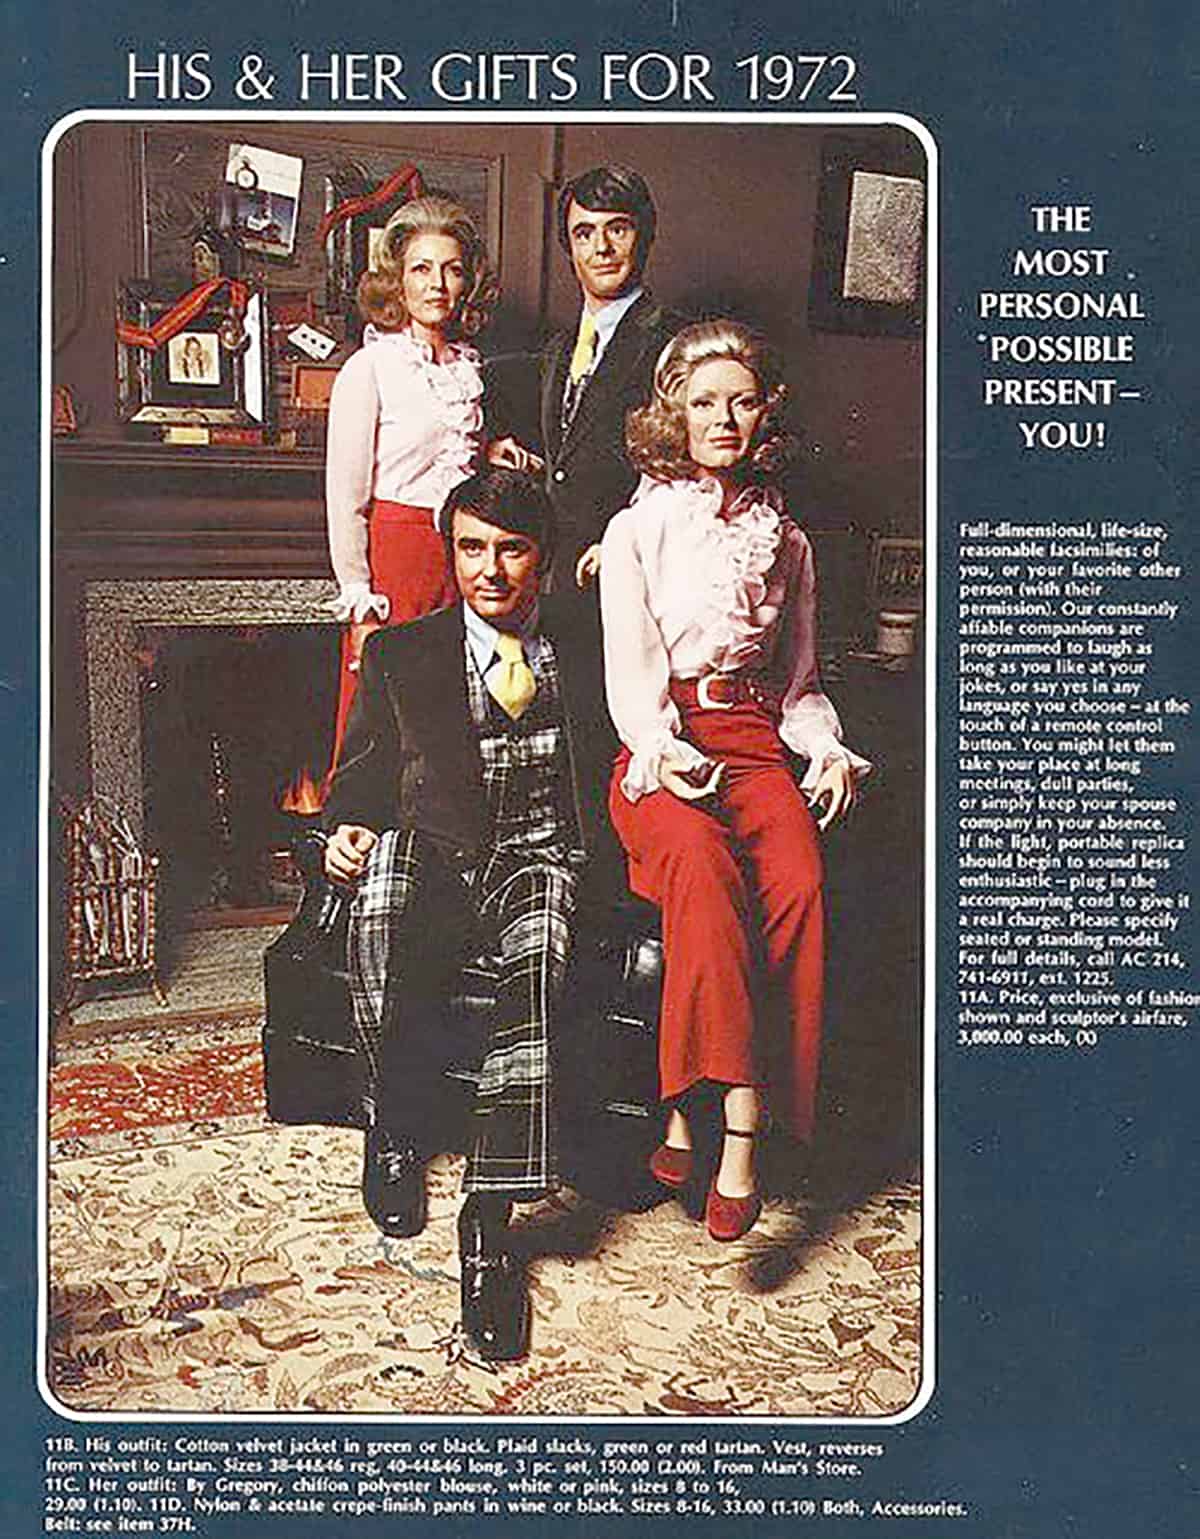 Neiman Marcus holiday catalogue, 1972